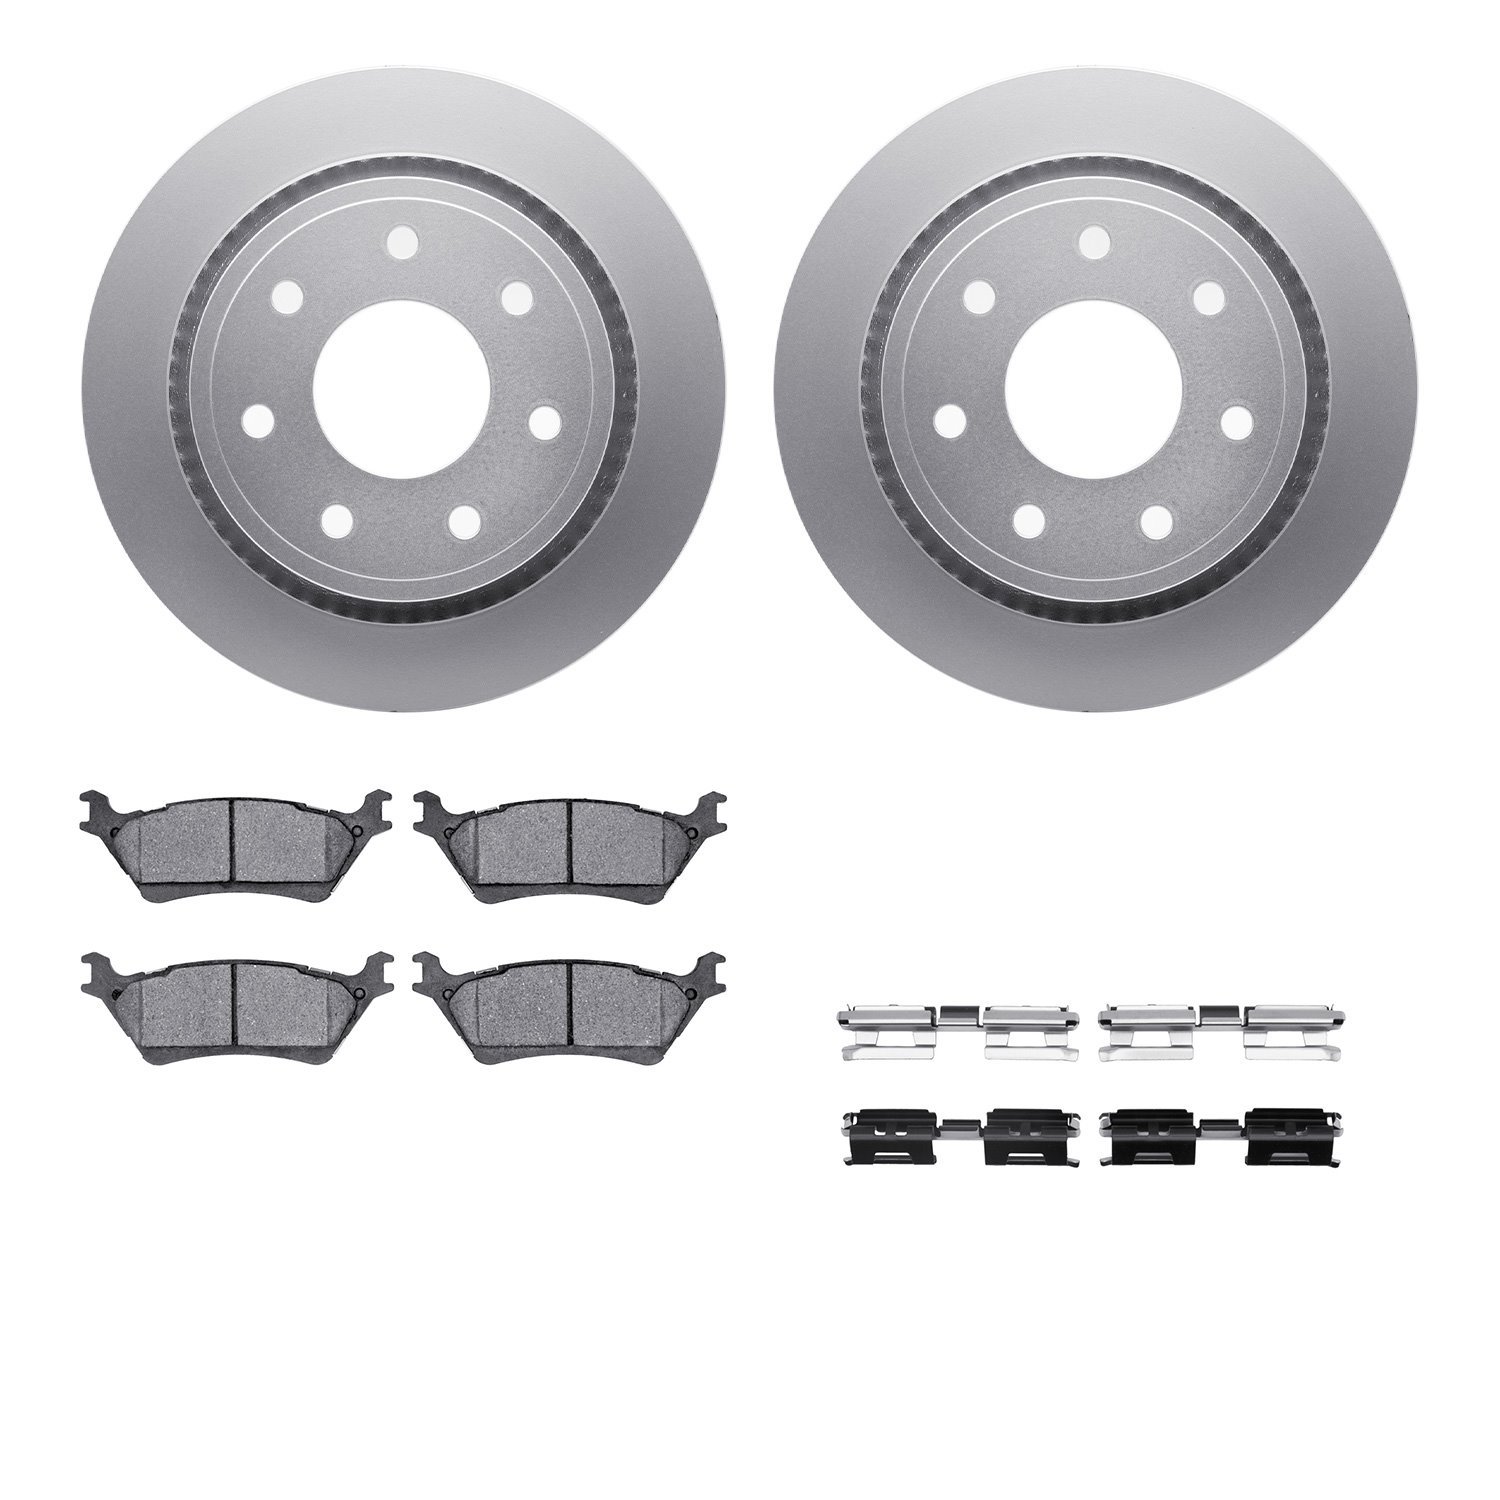 4212-54009 Geospec Brake Rotors w/Heavy-Duty Brake Pads & Hardware, 2012-2014 Ford/Lincoln/Mercury/Mazda, Position: Rear